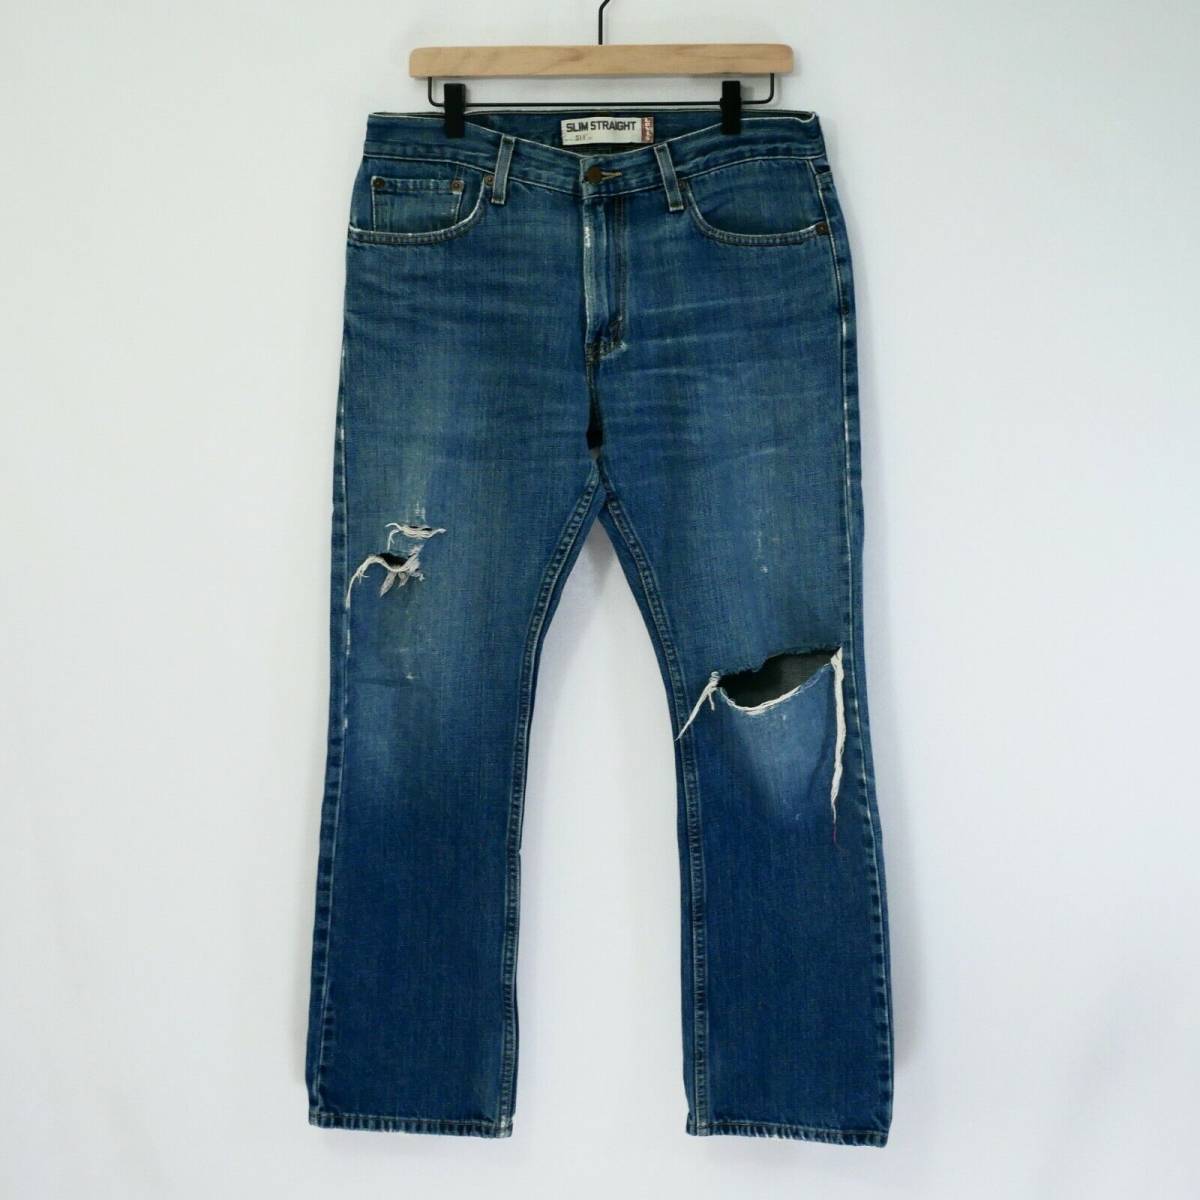 Levis 514 Slim Straight Denim Jeans Ripped Medium Wash, Men Size 33x30 海外 即決